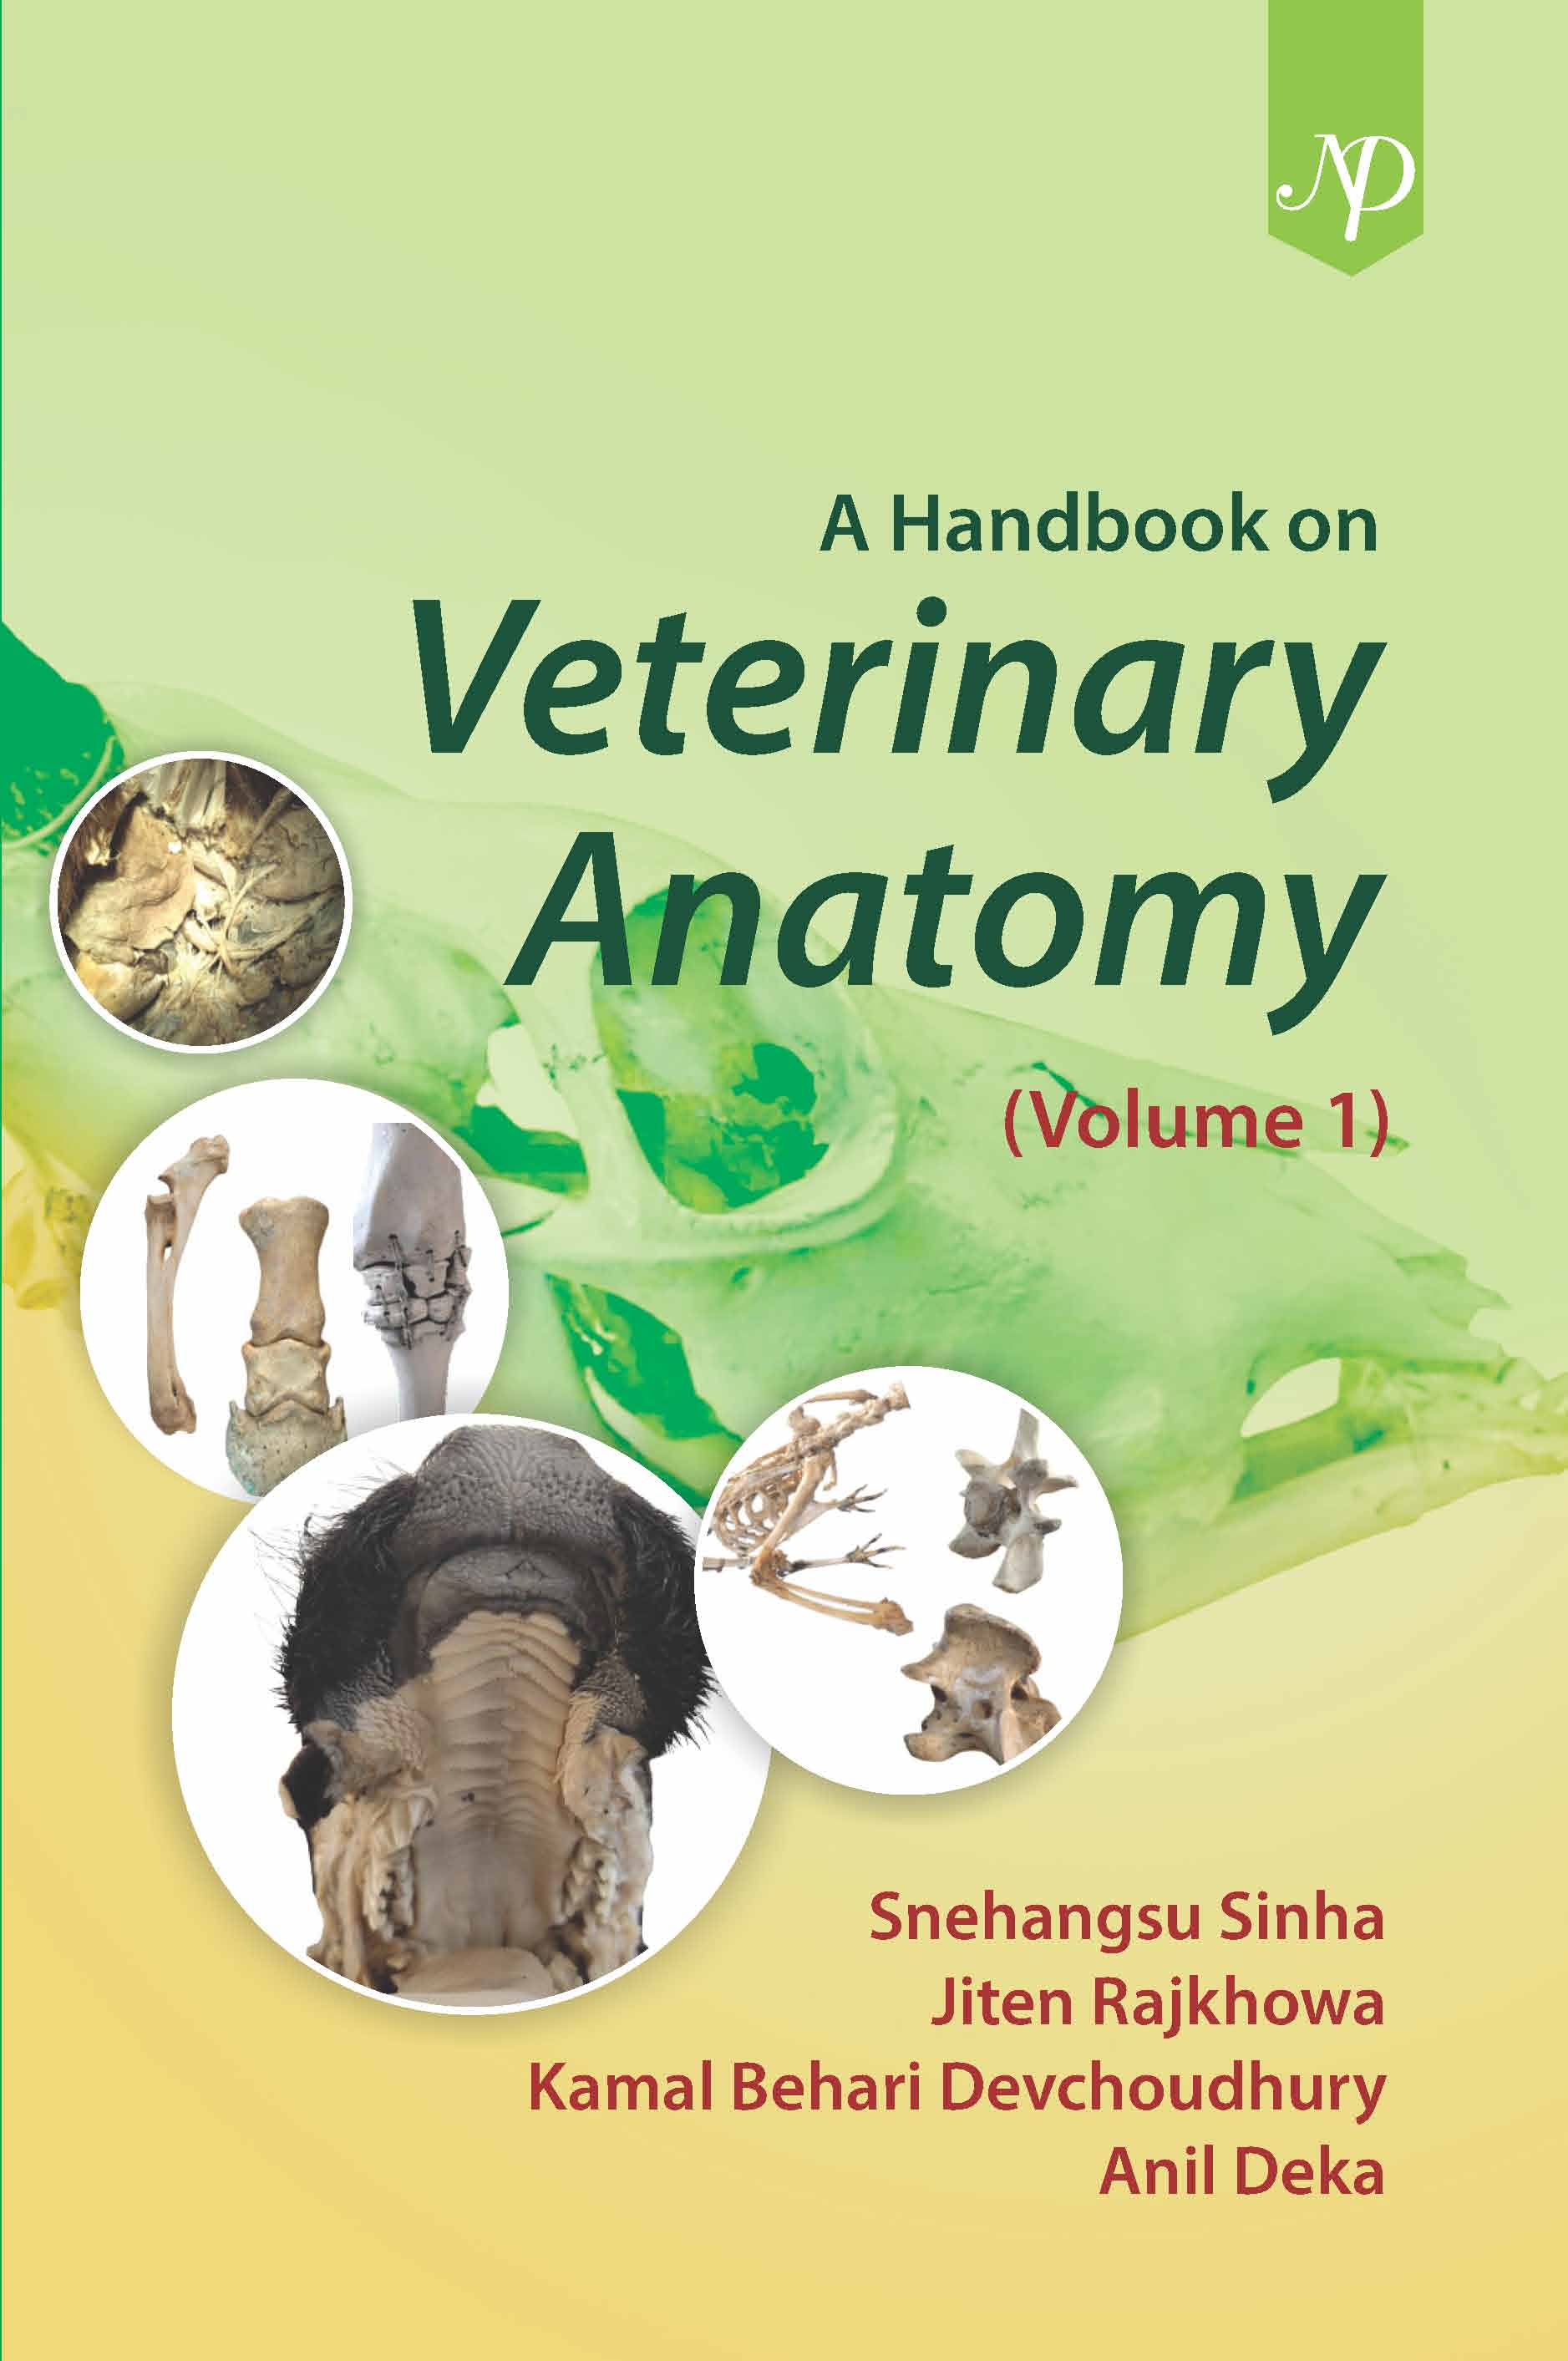 A Handbook on Veterinary Anatomy (Vol. 1) Cover.jpg